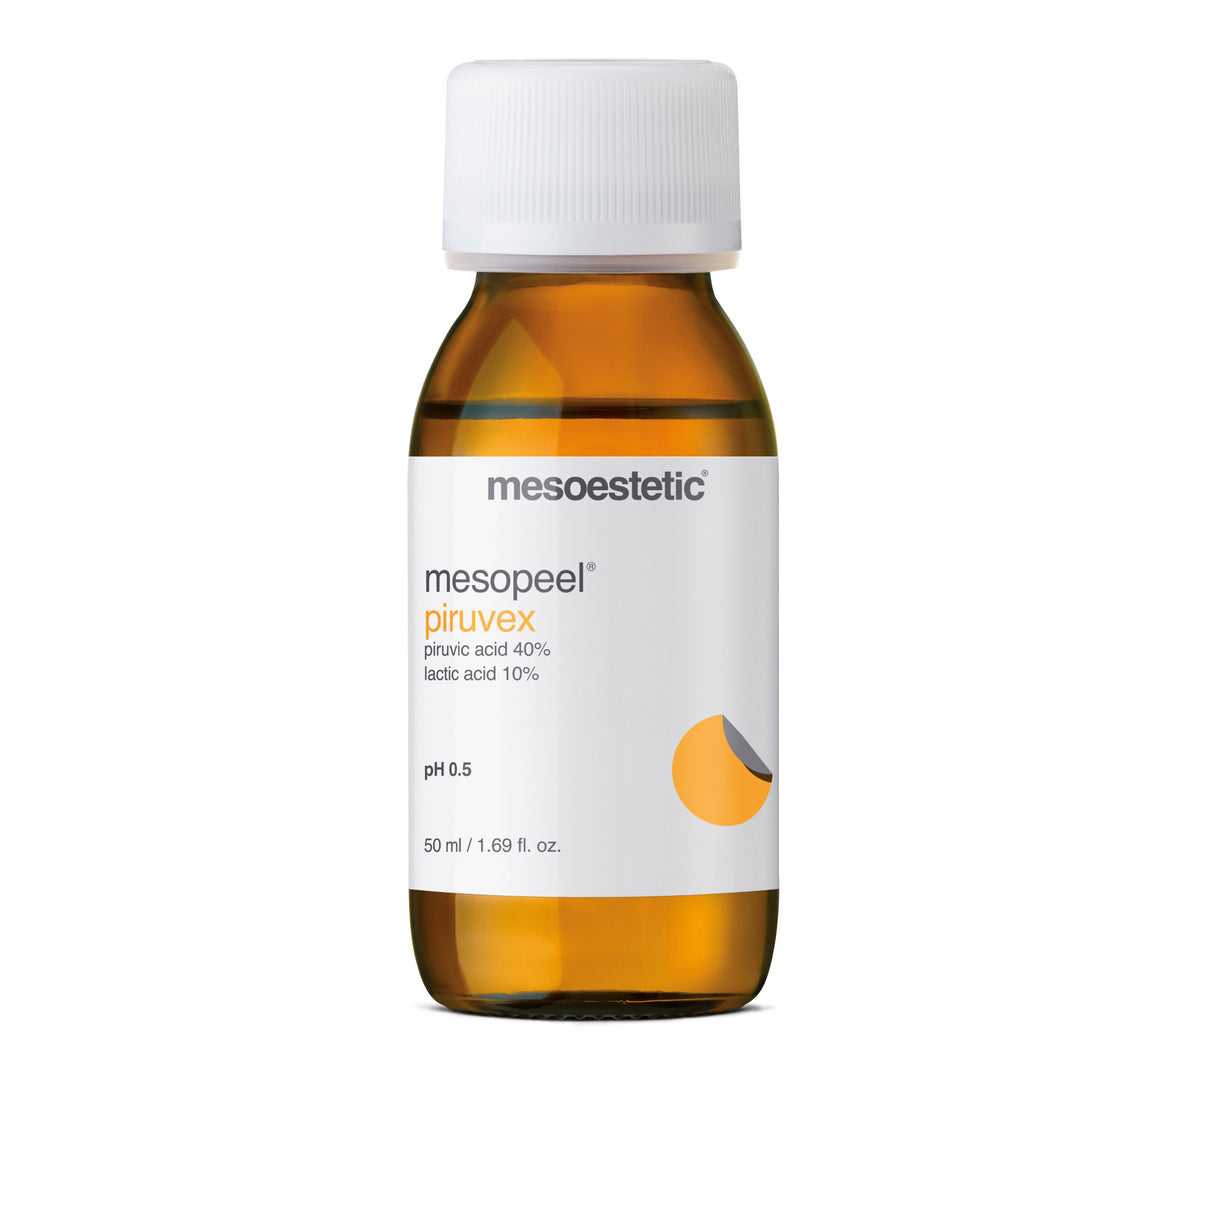 mesopeel piruvex | peeling with 40% pyruvic acid, 10% lactic acid 50ml